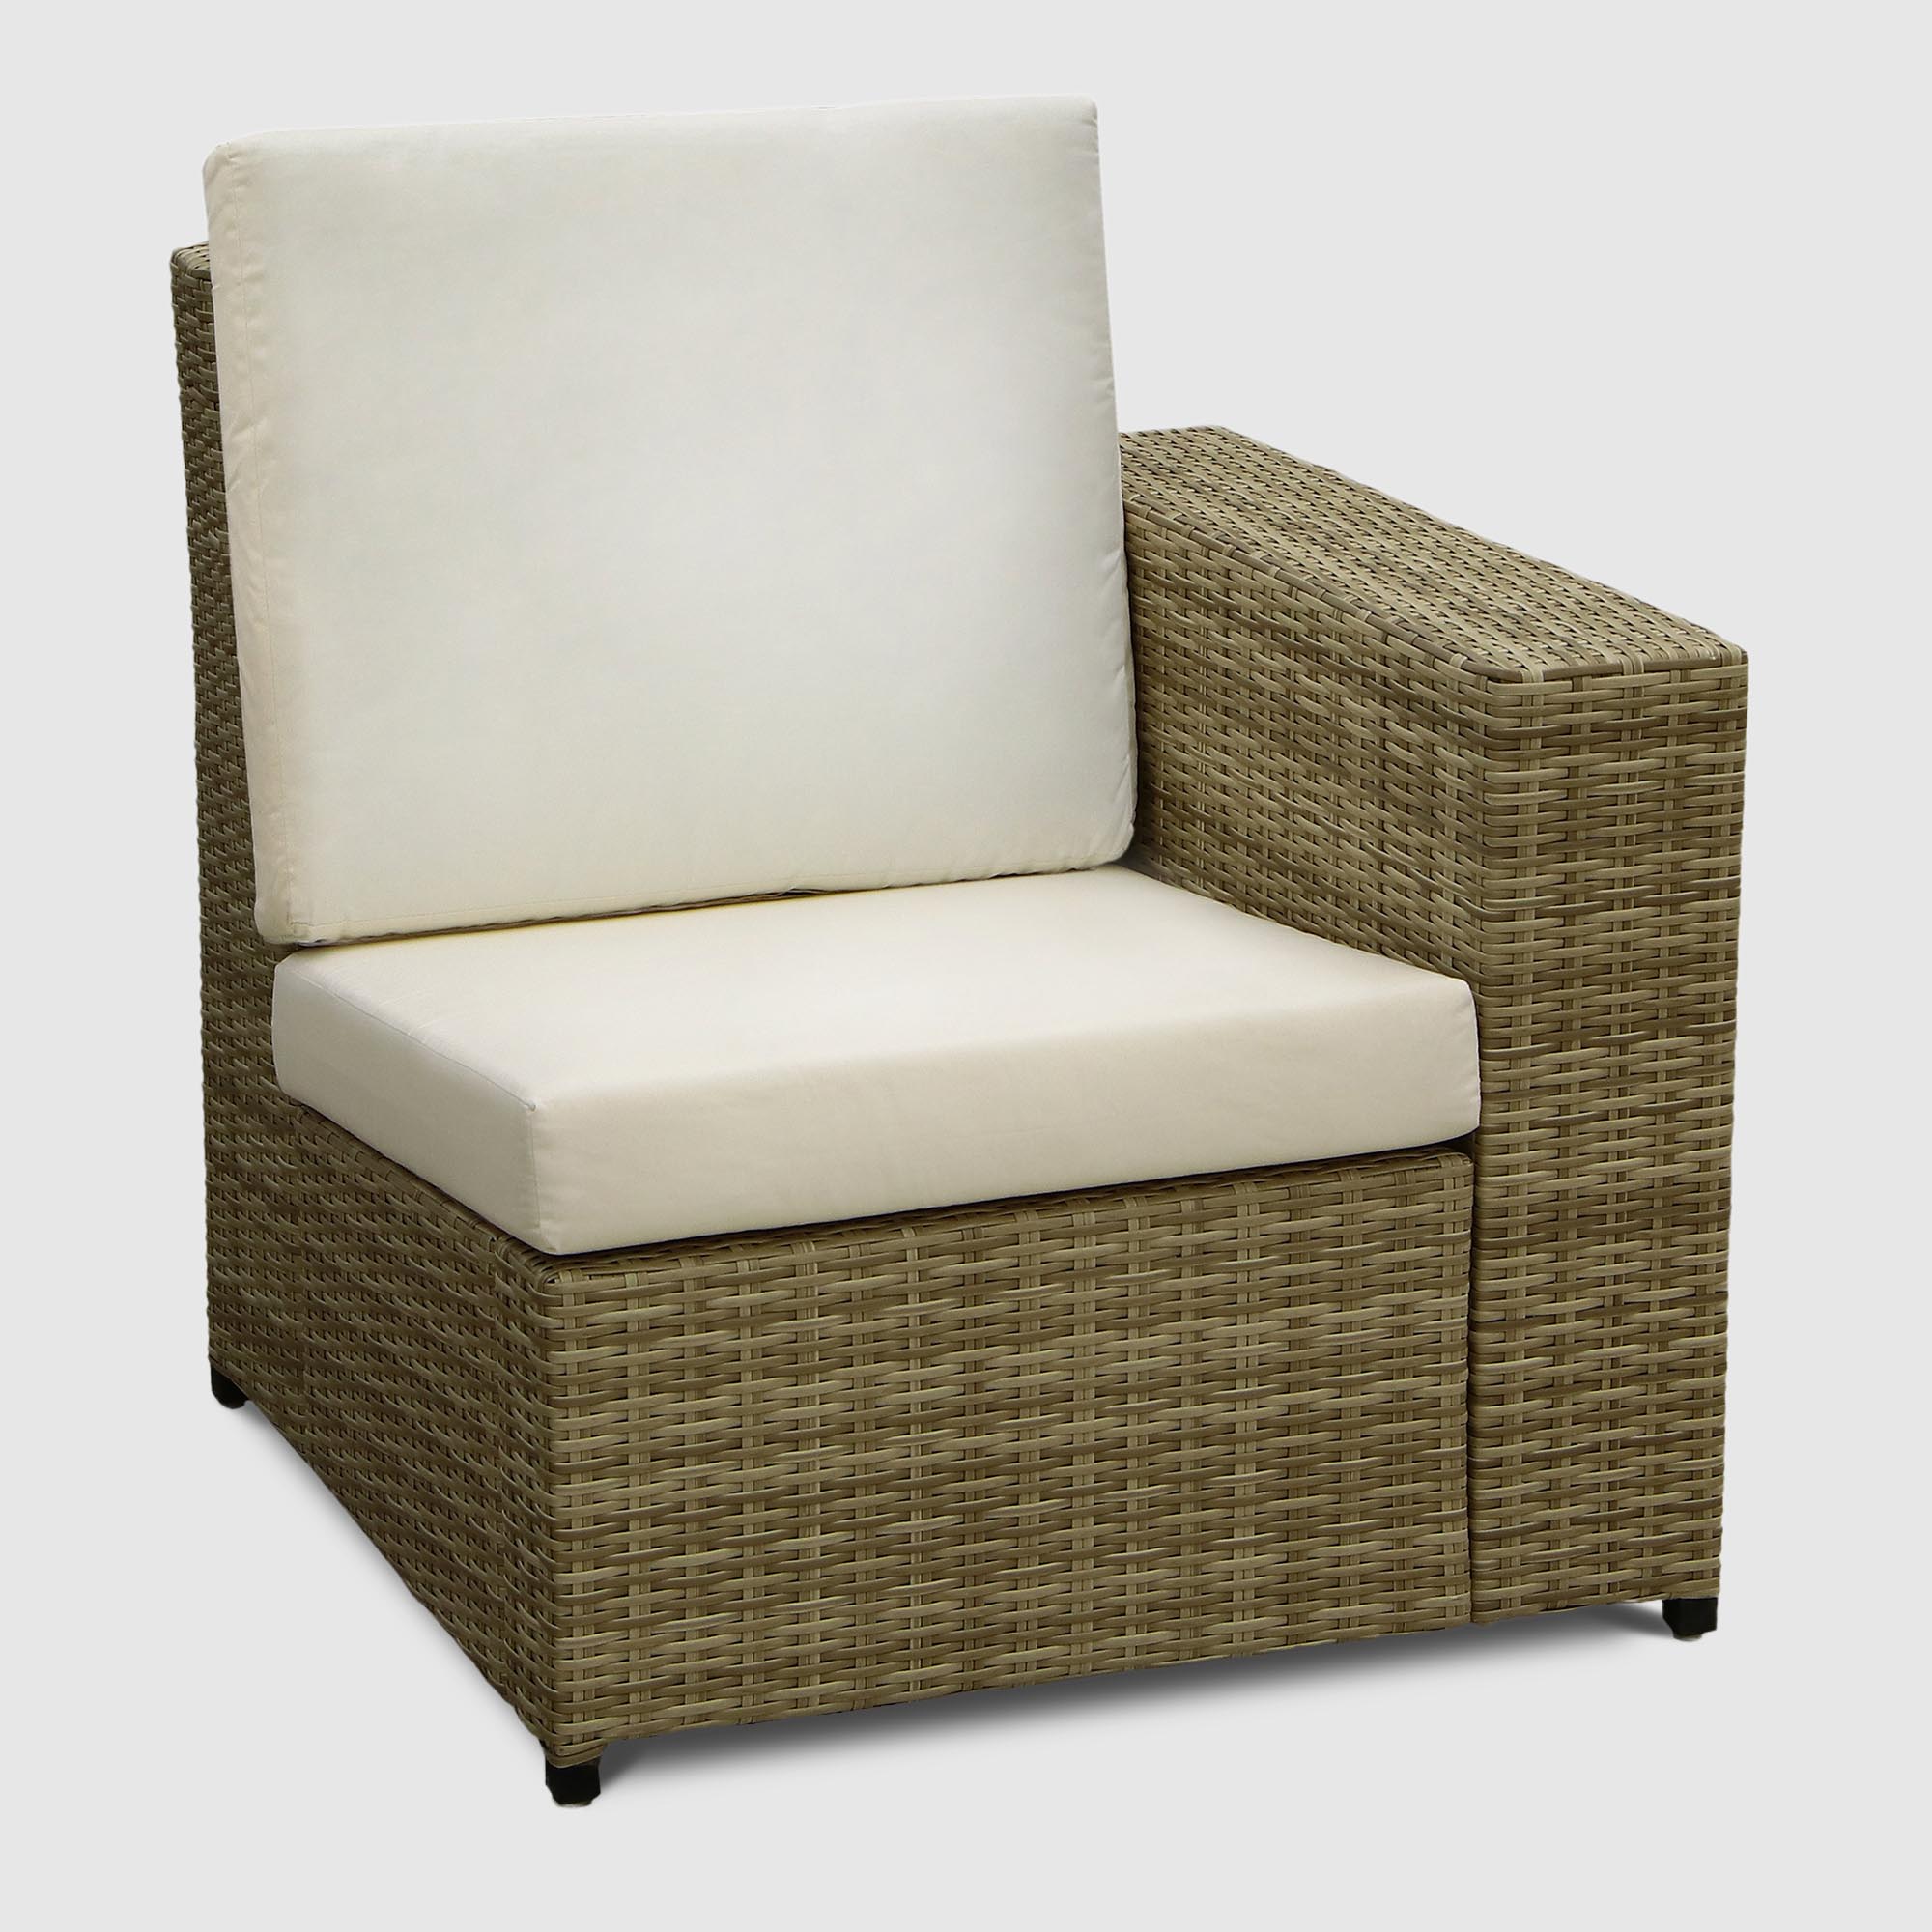 Комплект мебели Rattan grand 2 предмета, цвет коричневый, размер 220х85х82 - фото 4